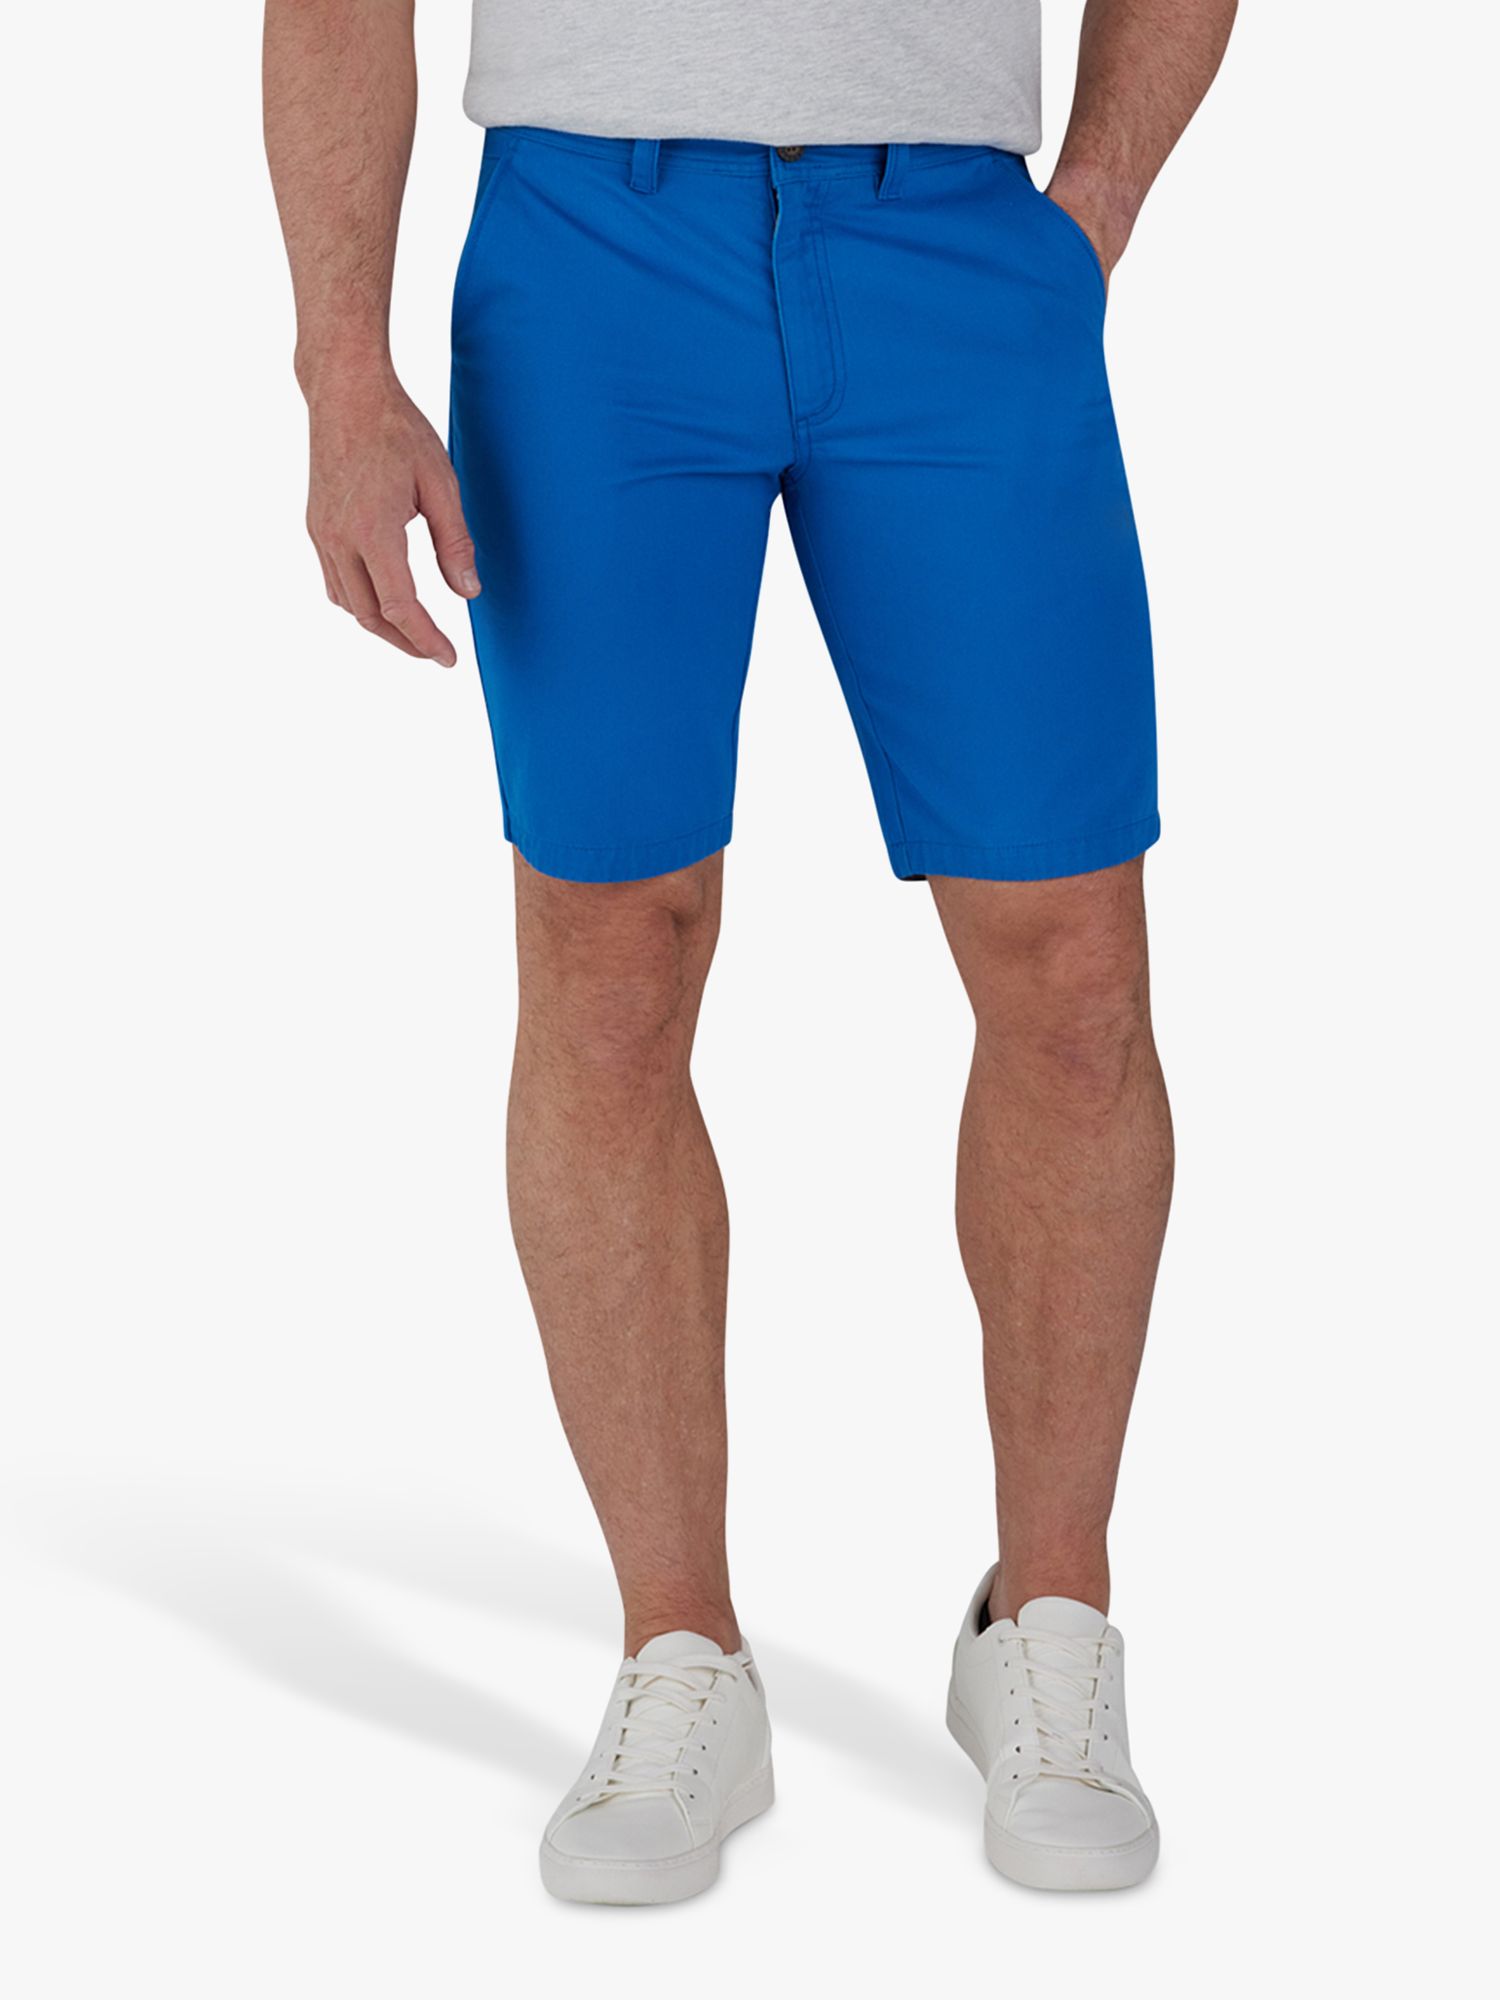 Raging Bull Chino Shorts, Cobalt Blue, 46R